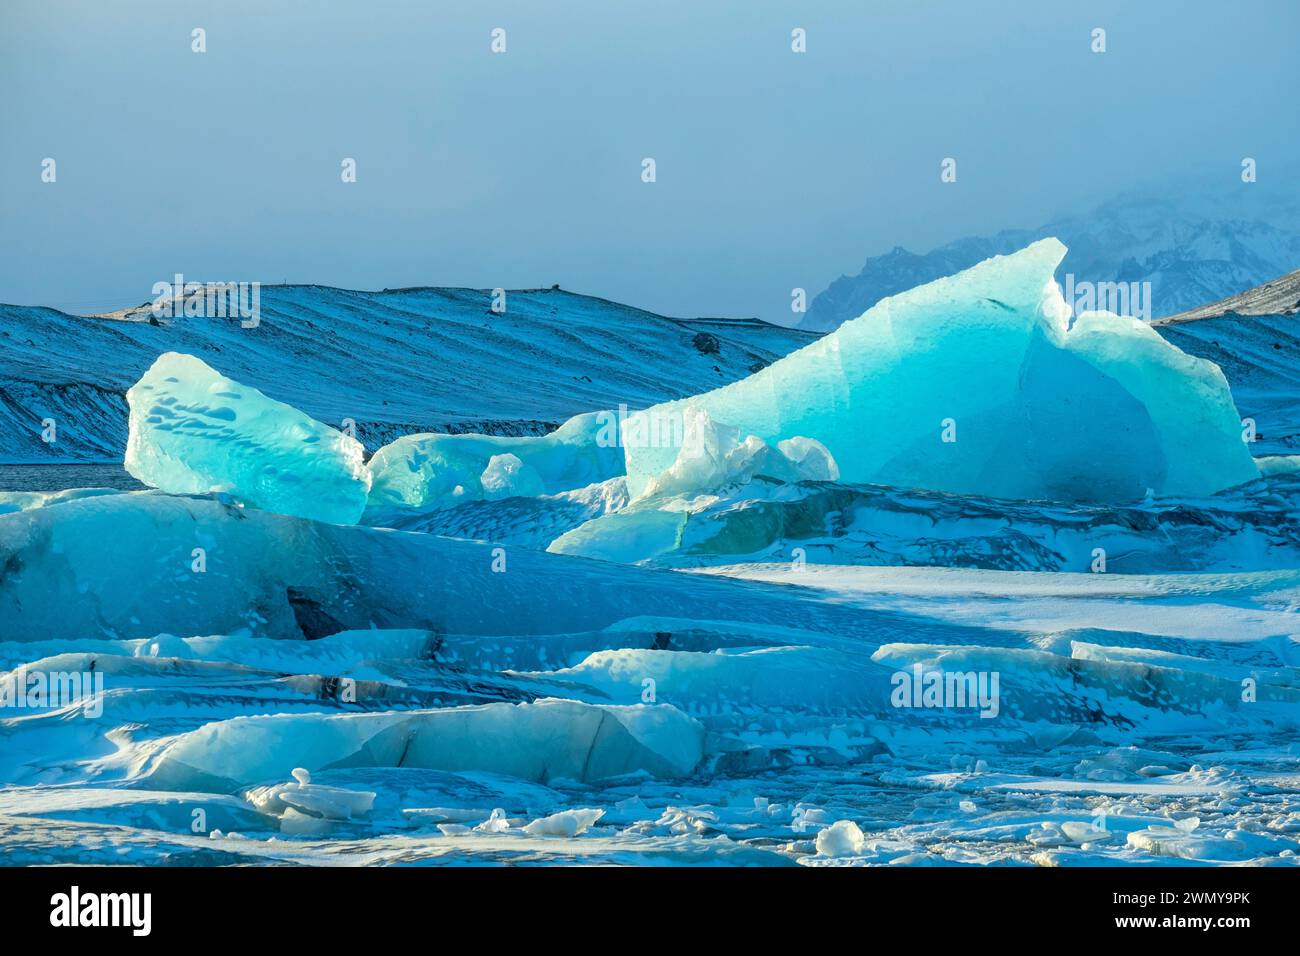 Iceland, South Coast, Vatnajokull National Park, Skaftafell, glacier and glacial lake of Jökulsárlón, icebergs Stock Photo